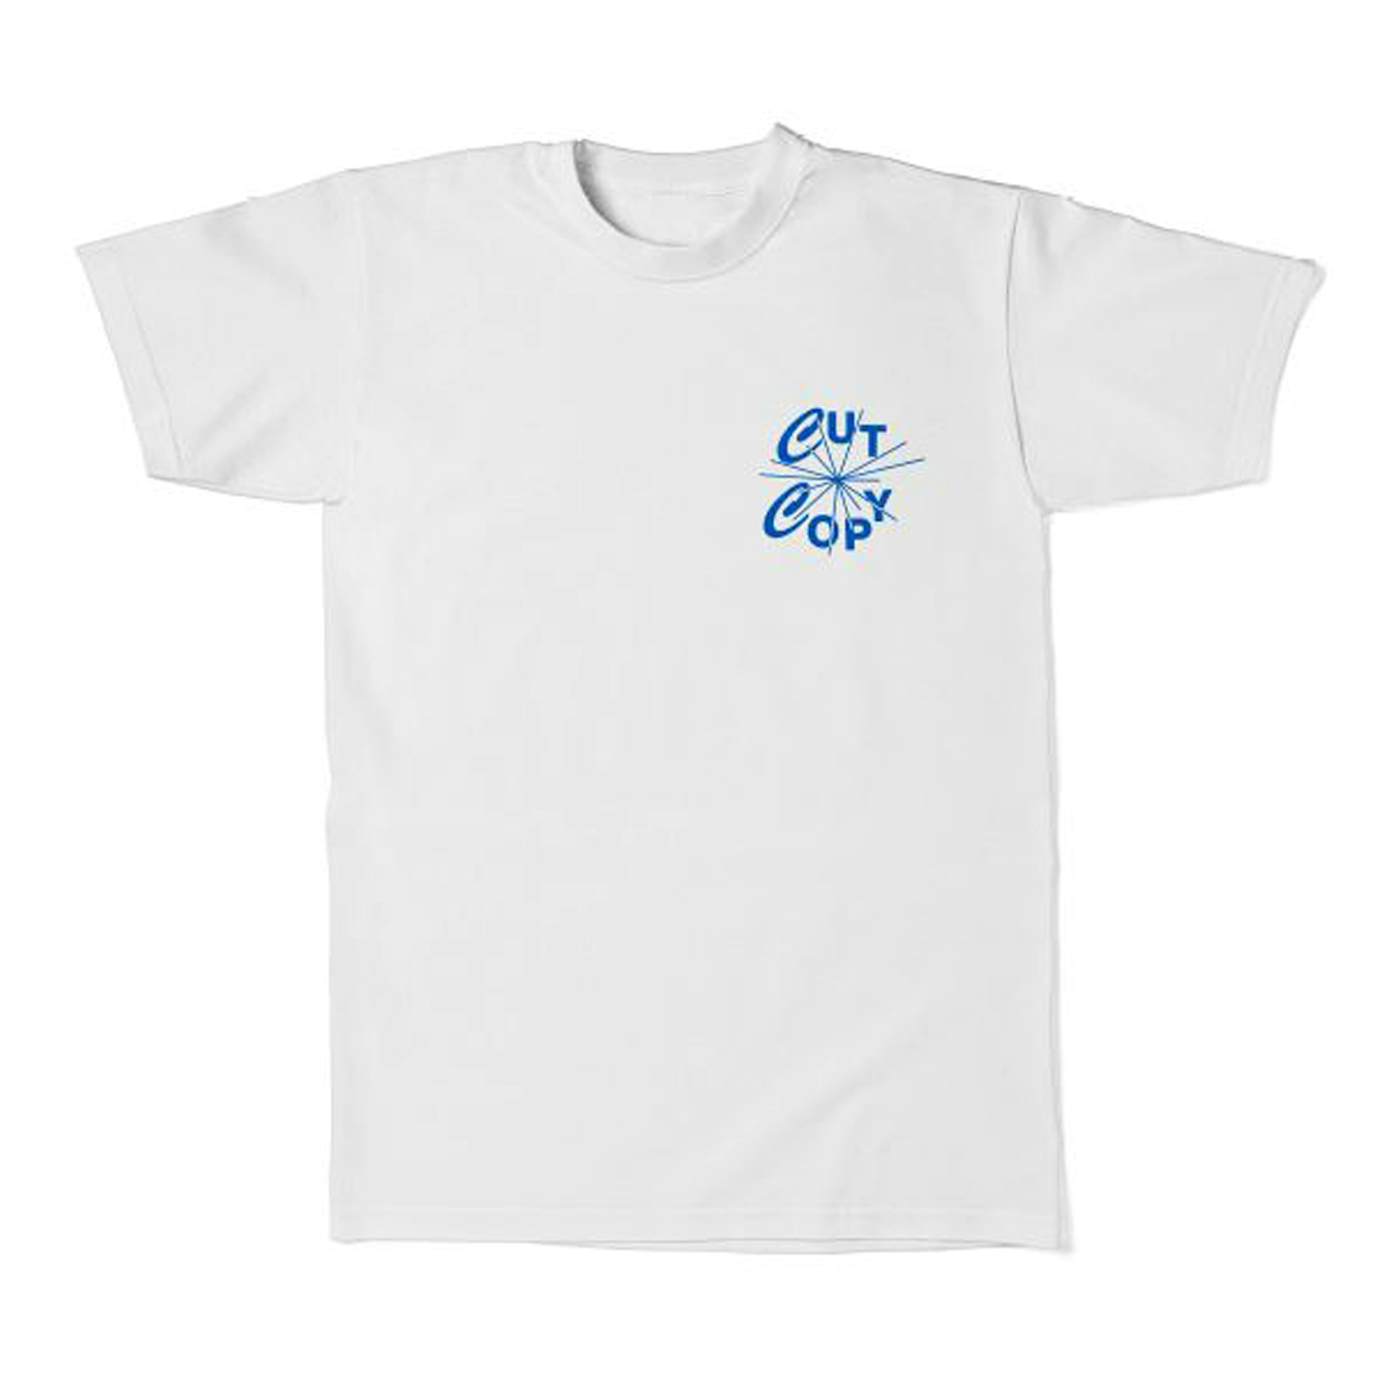 Cut Copy 3rd Eye T-shirt